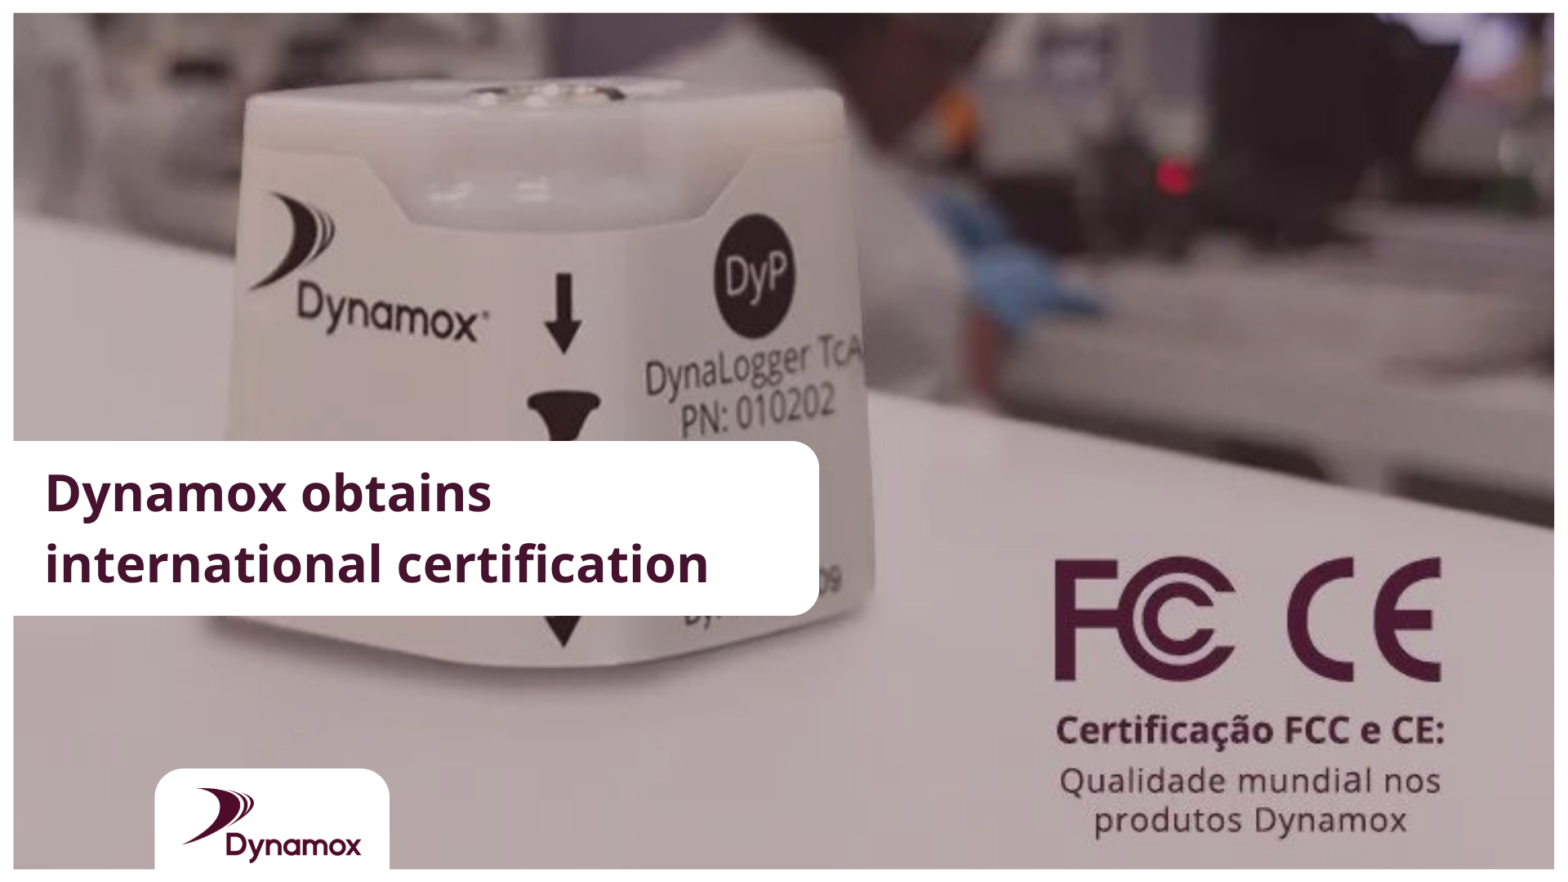 Dynamox obtains international certification